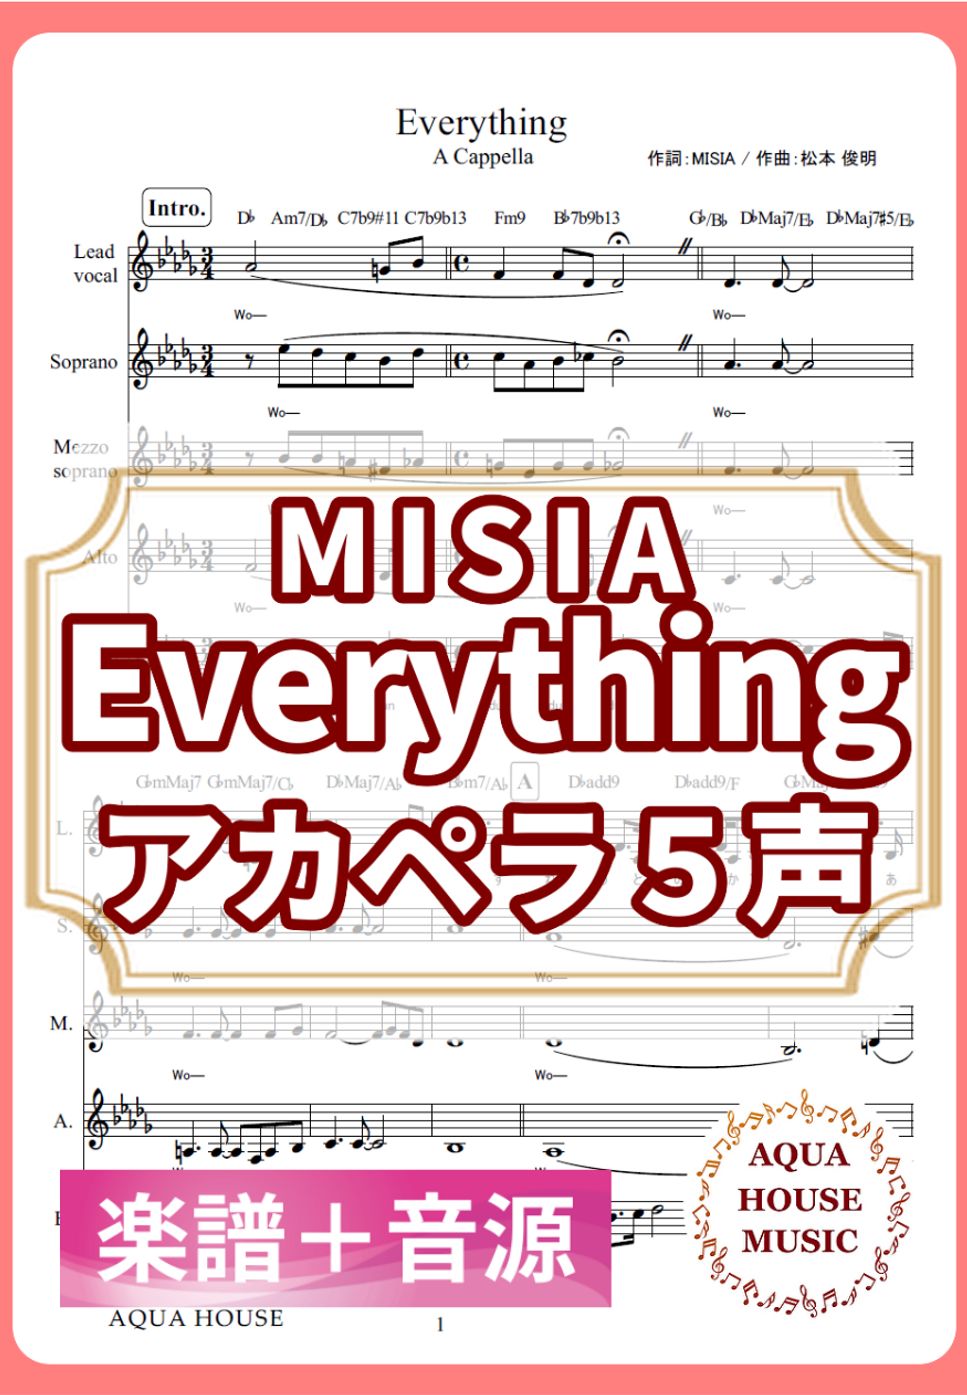 MISIA - Everything (アカペラ楽譜＋練習音源セット販売) by 飯田 亜紗子